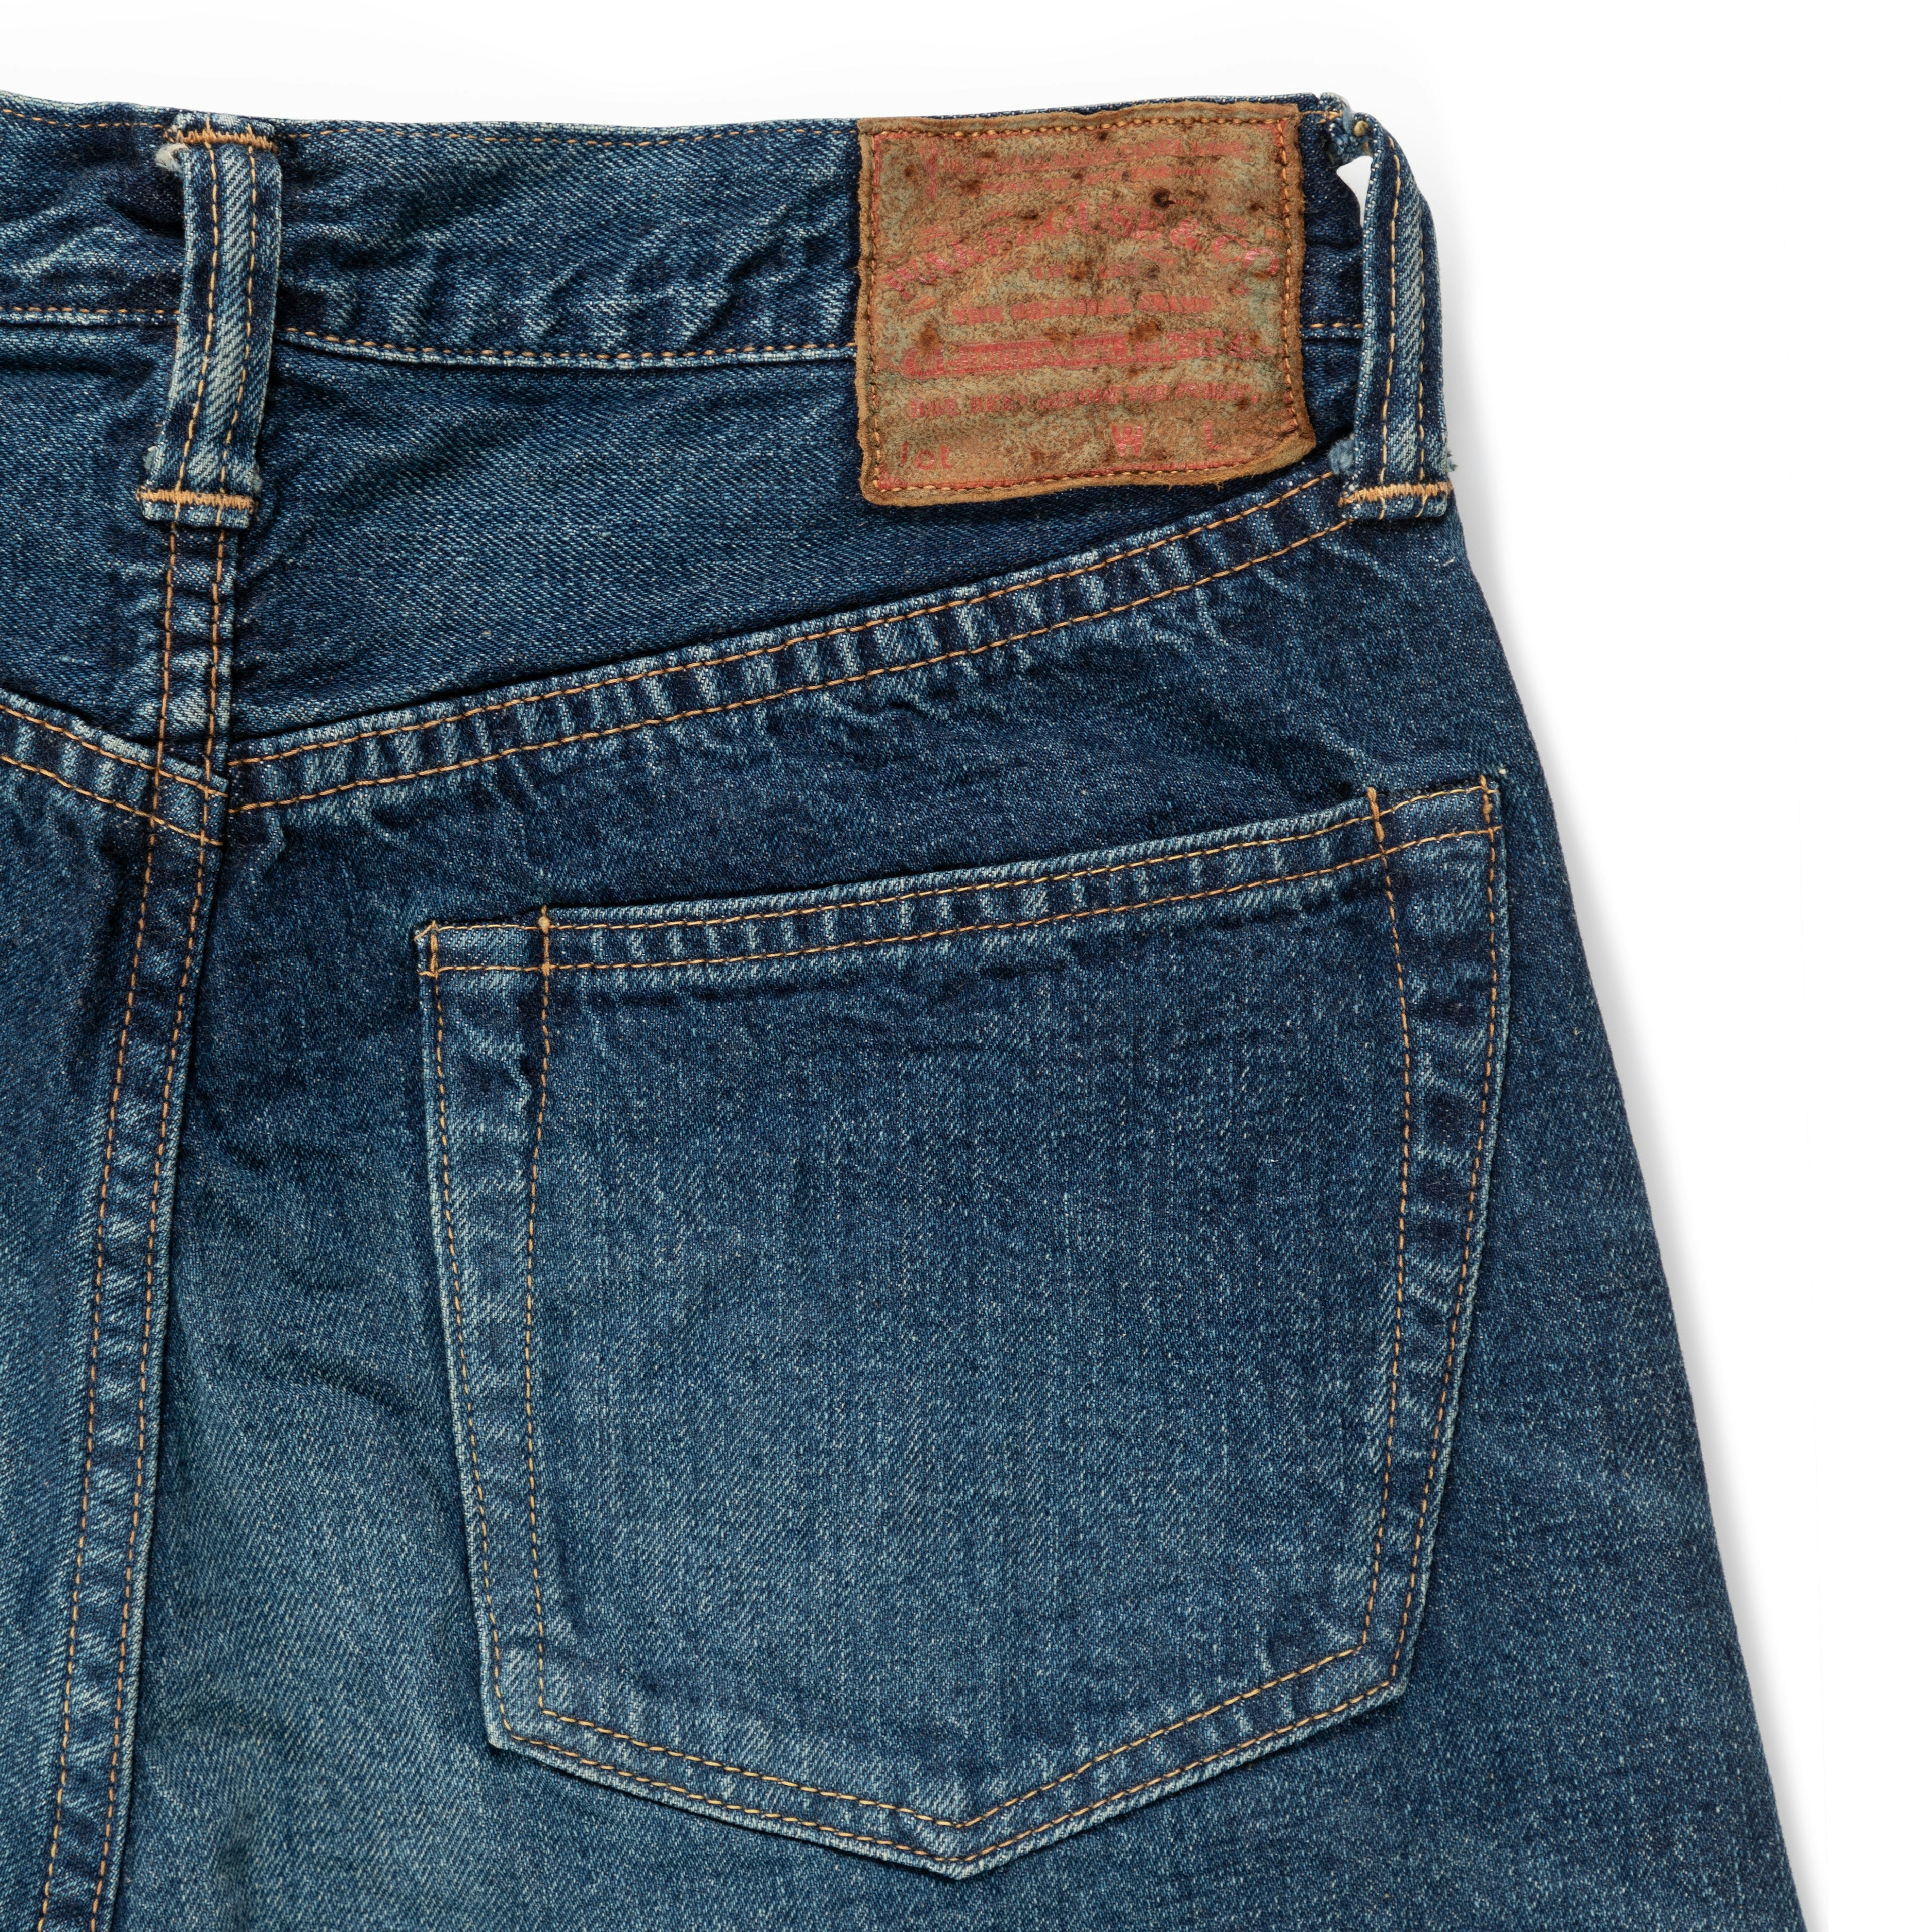 The Jeans Denim - 5 Armoury Pocket